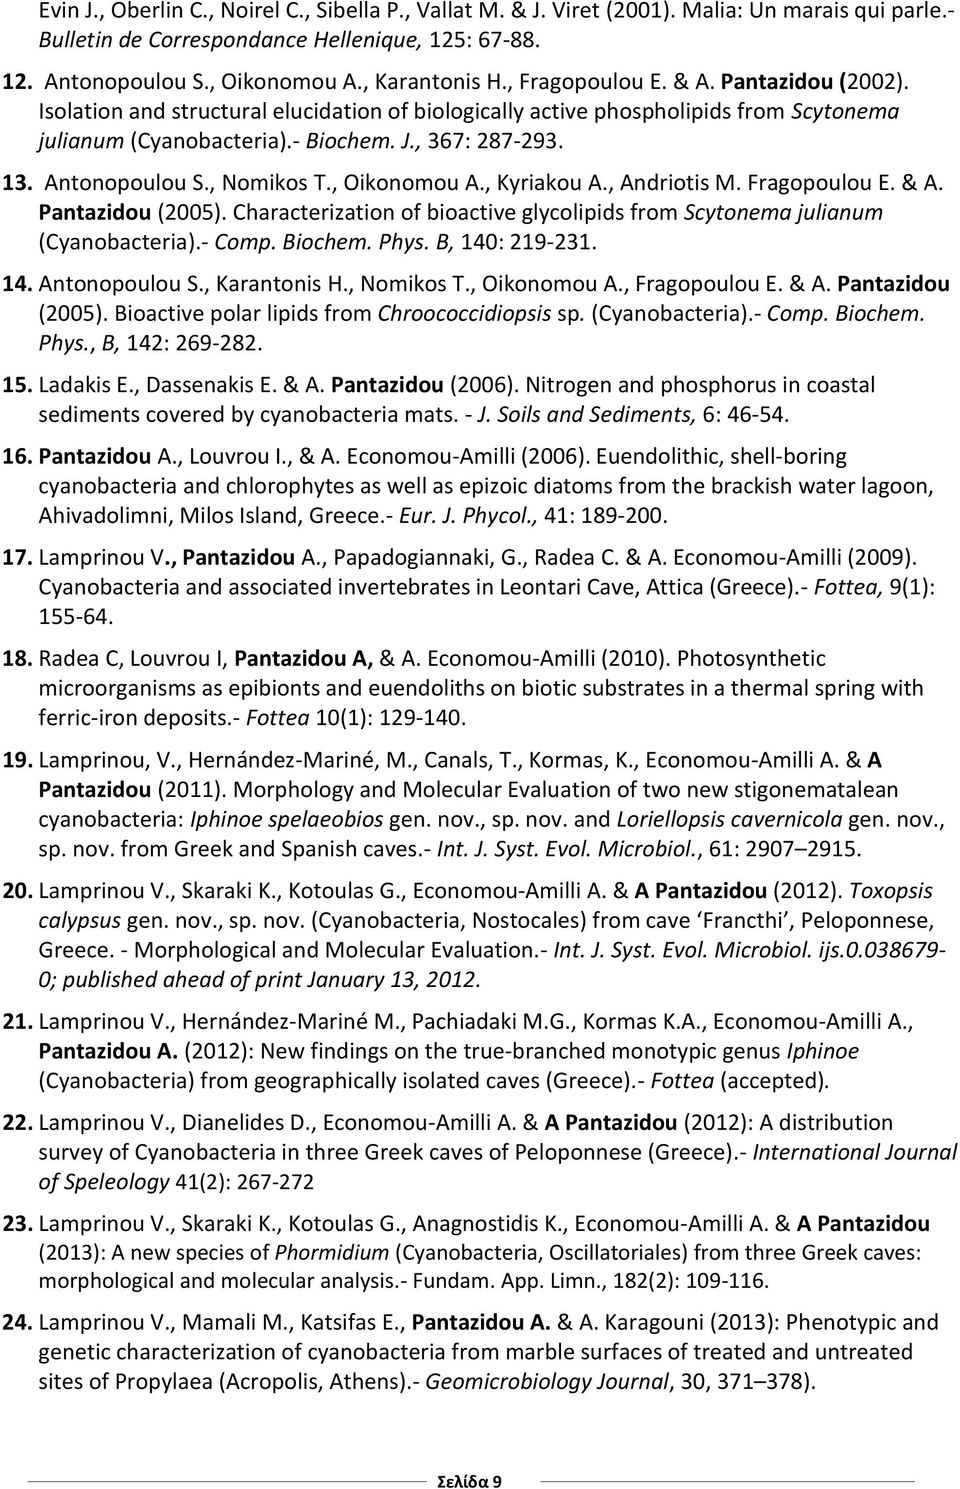 13. Antonopoulou S., Νomikos Τ., Οikonomou Α., Κyriakou Α., Αndriotis Μ. Fragopoulou Ε. & Α. Pantazidou (2005). Characterization of bioactive glycolipids from Scytonema julianum (Cyanobacteria).